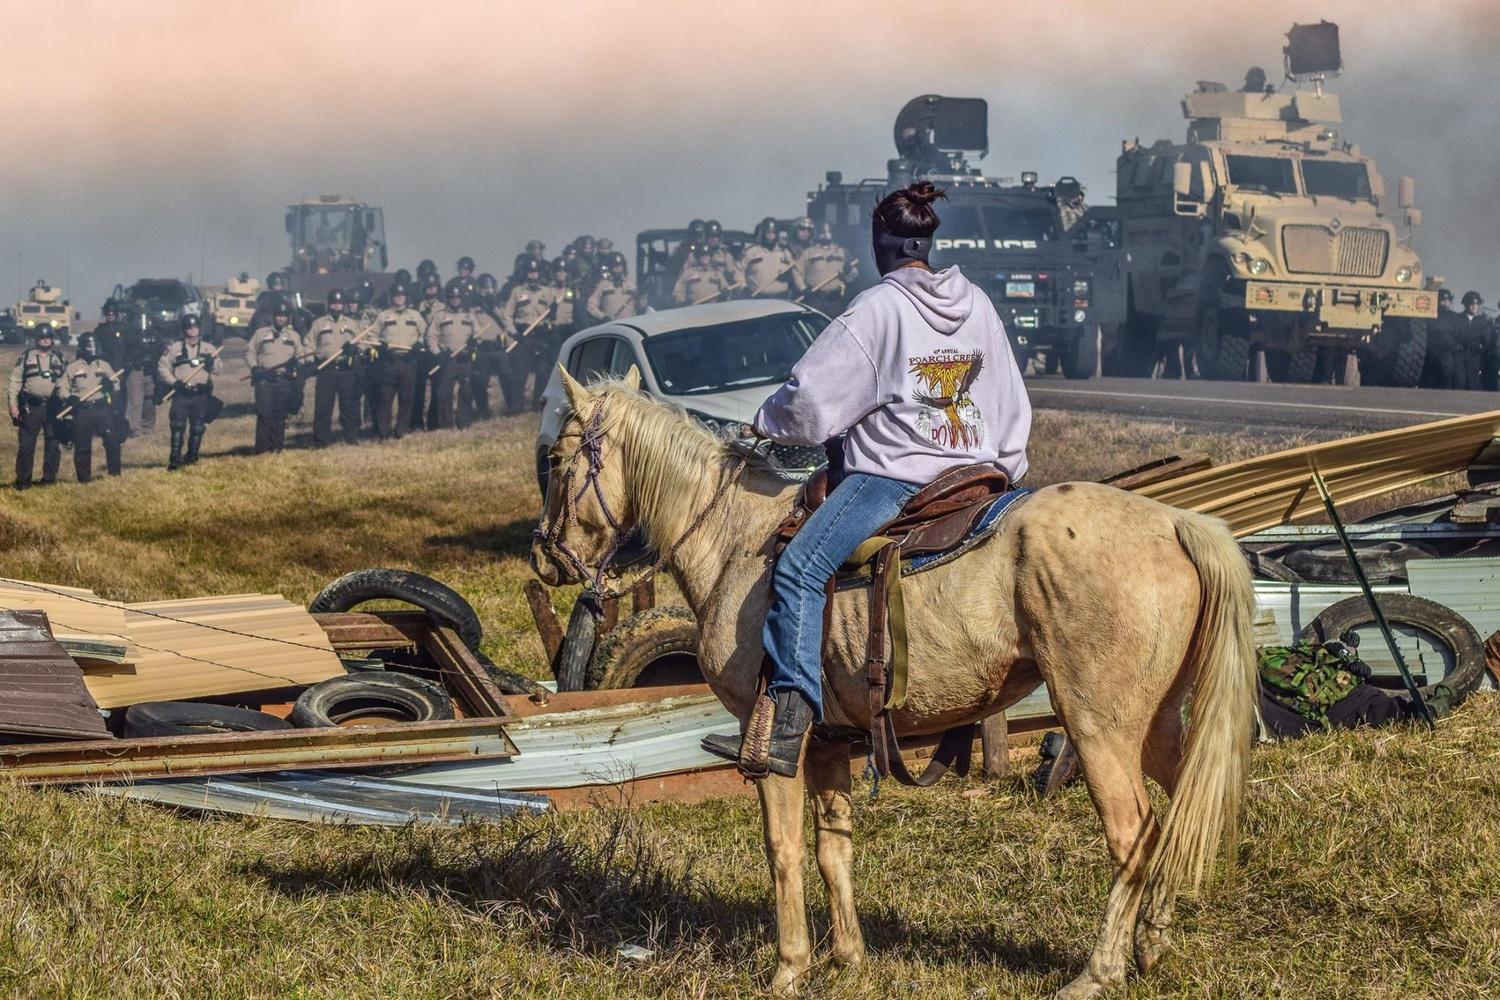 horseback indigenous American protestor faces militarized police at Standing Rock, North Dakota